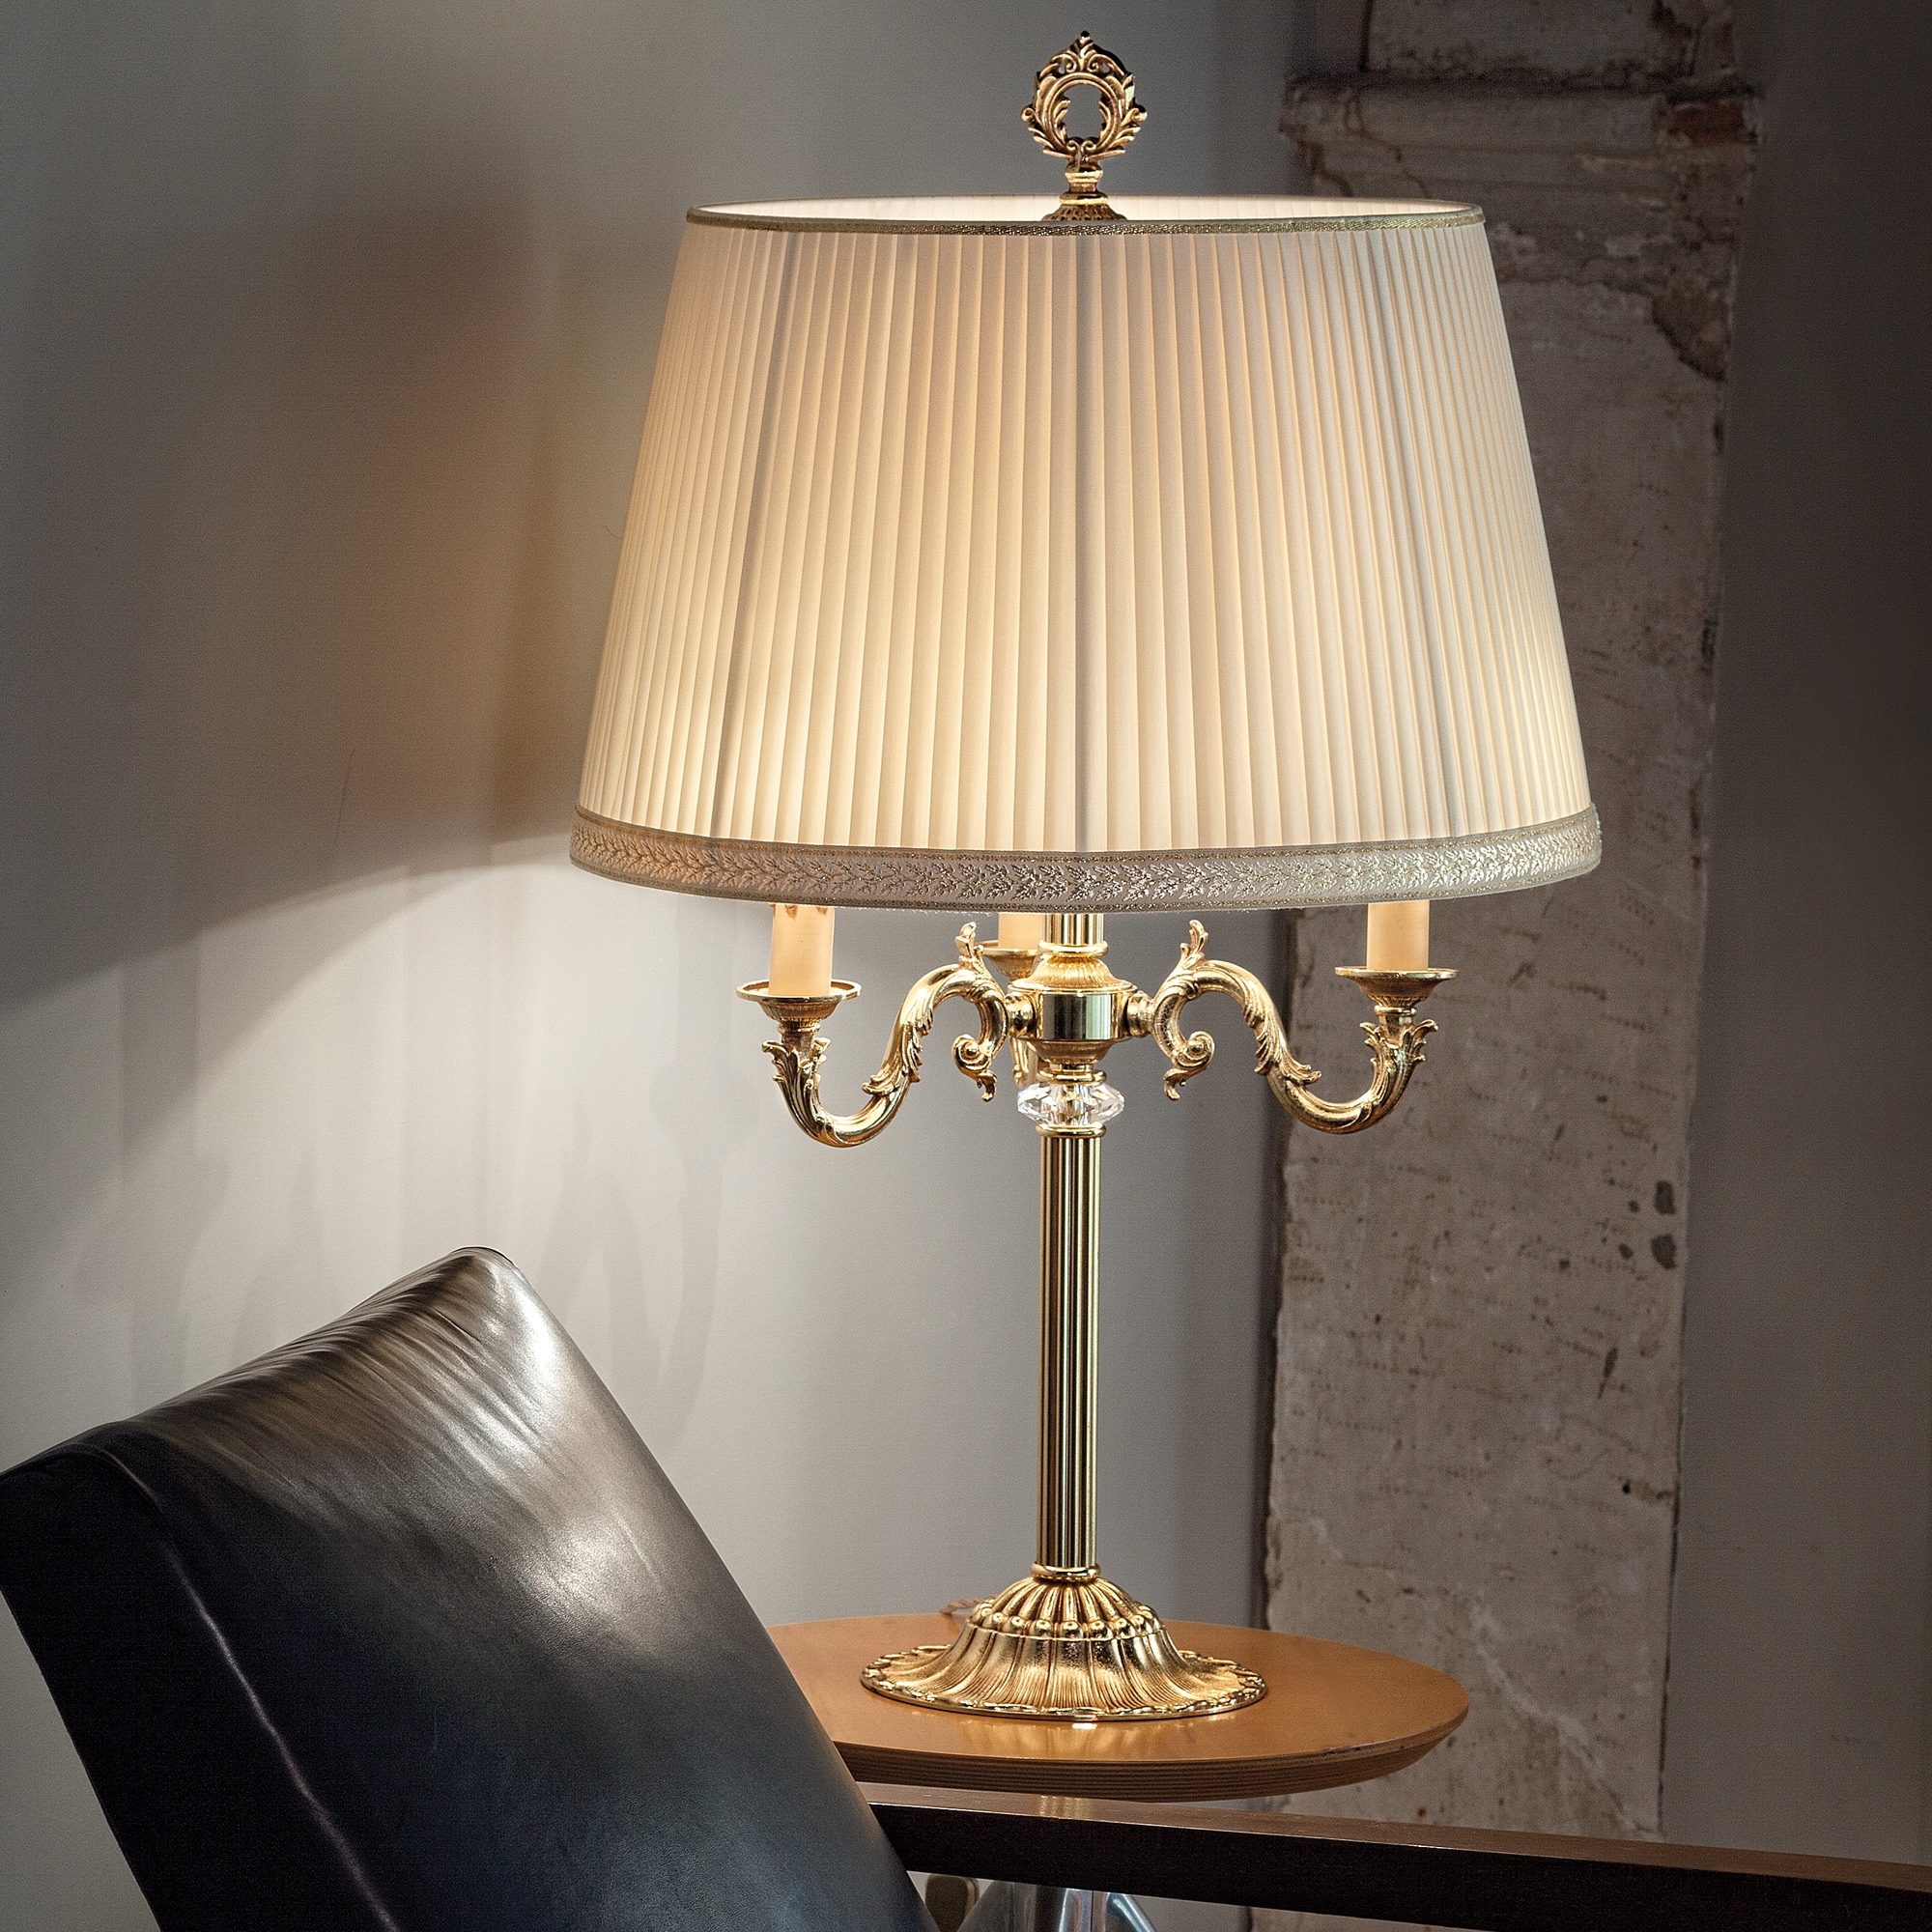 Candelabra Style Table Lamp With Swarovski Detail